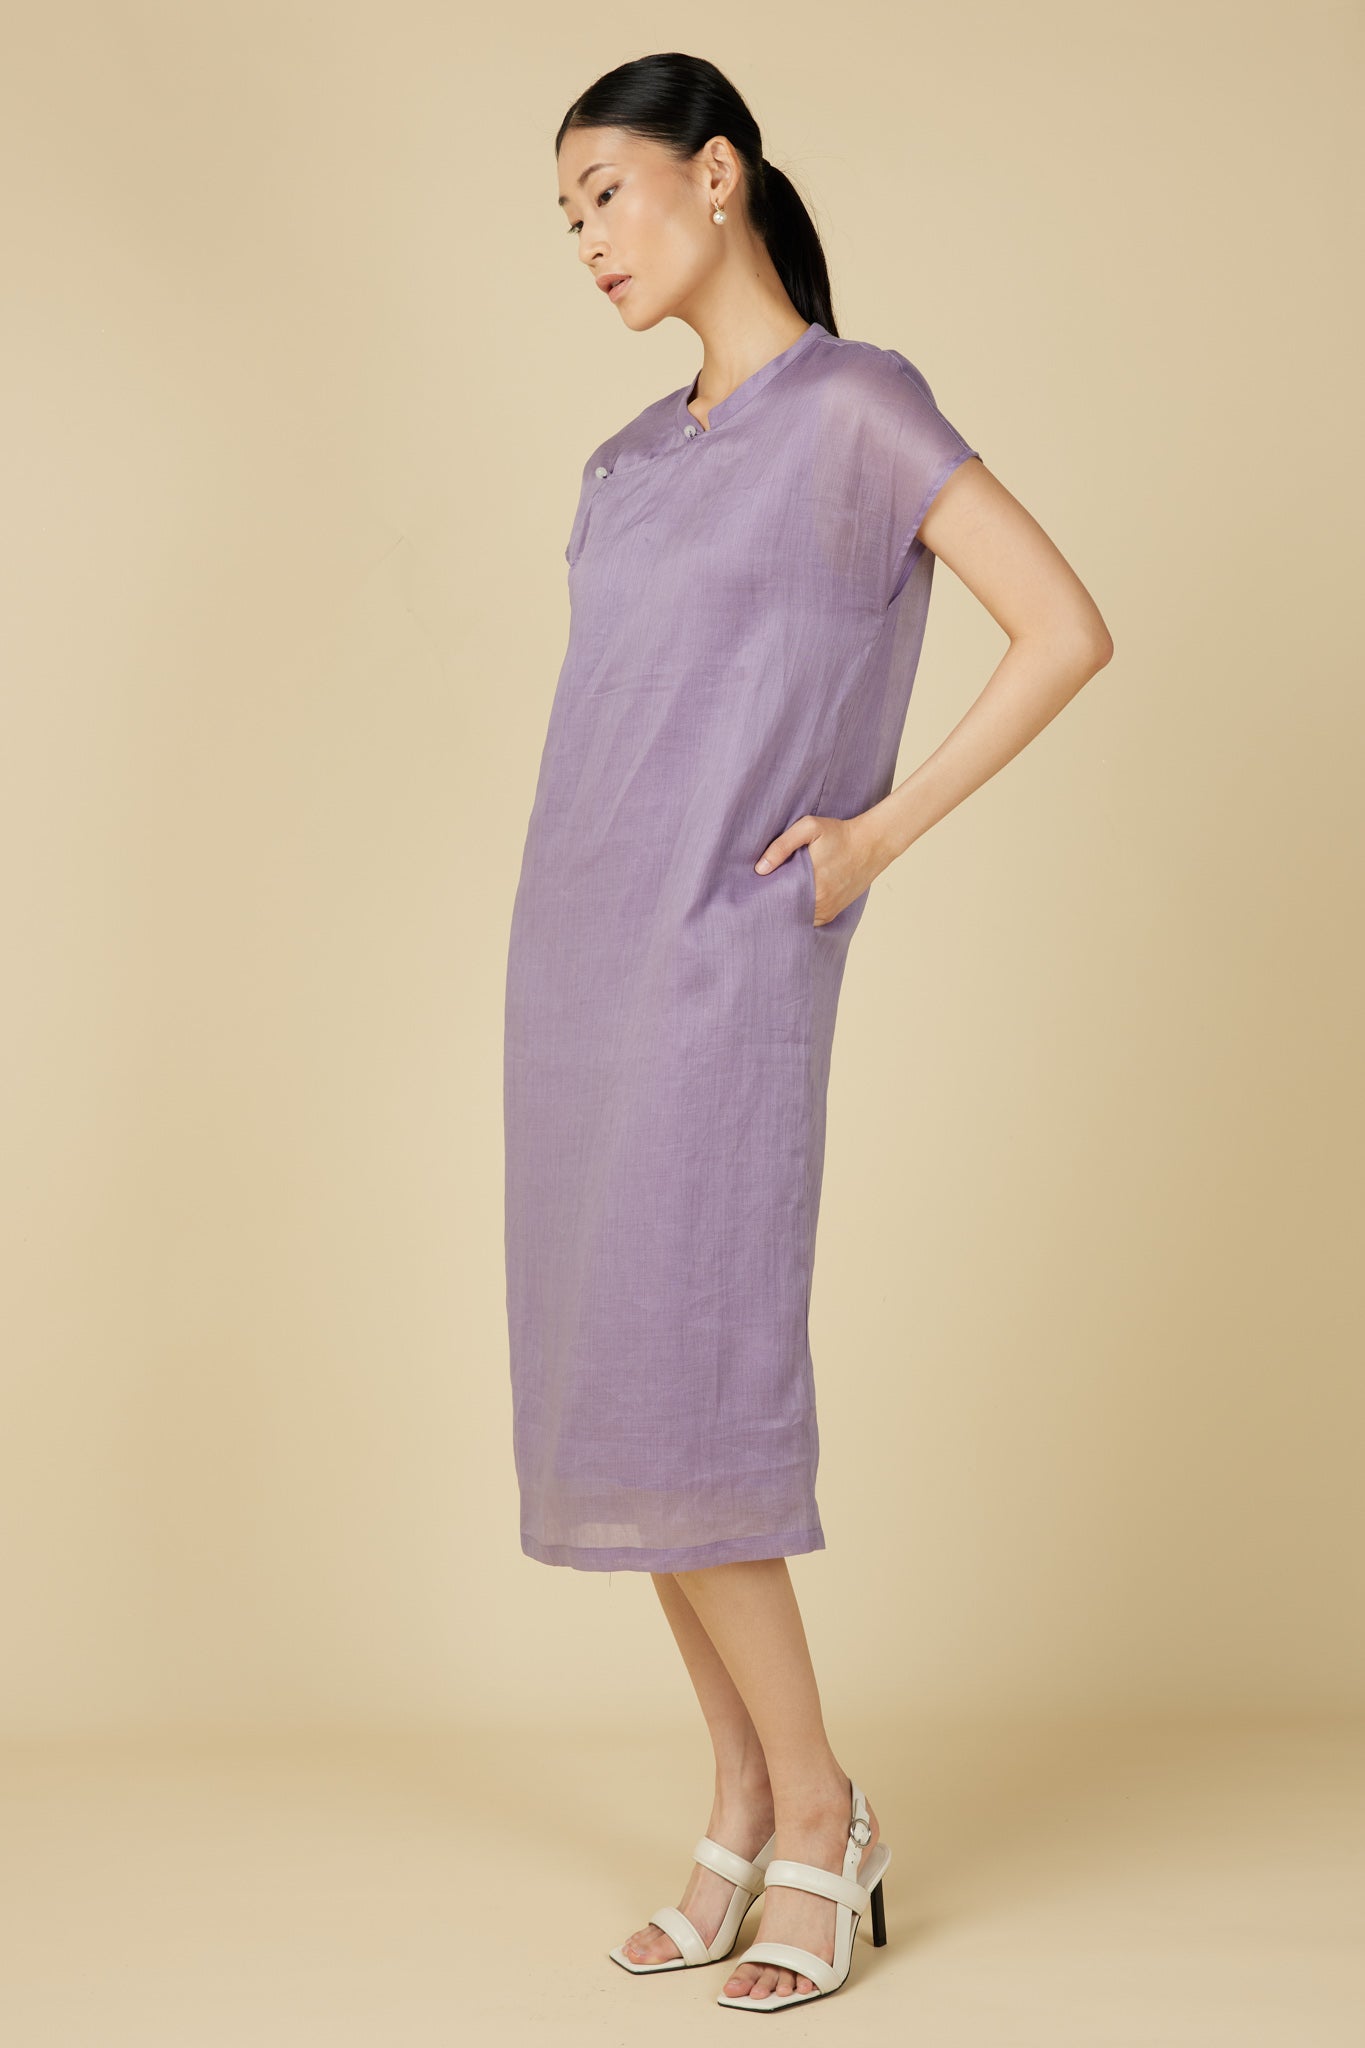 Minimalist Cheongsam Dress in Purple